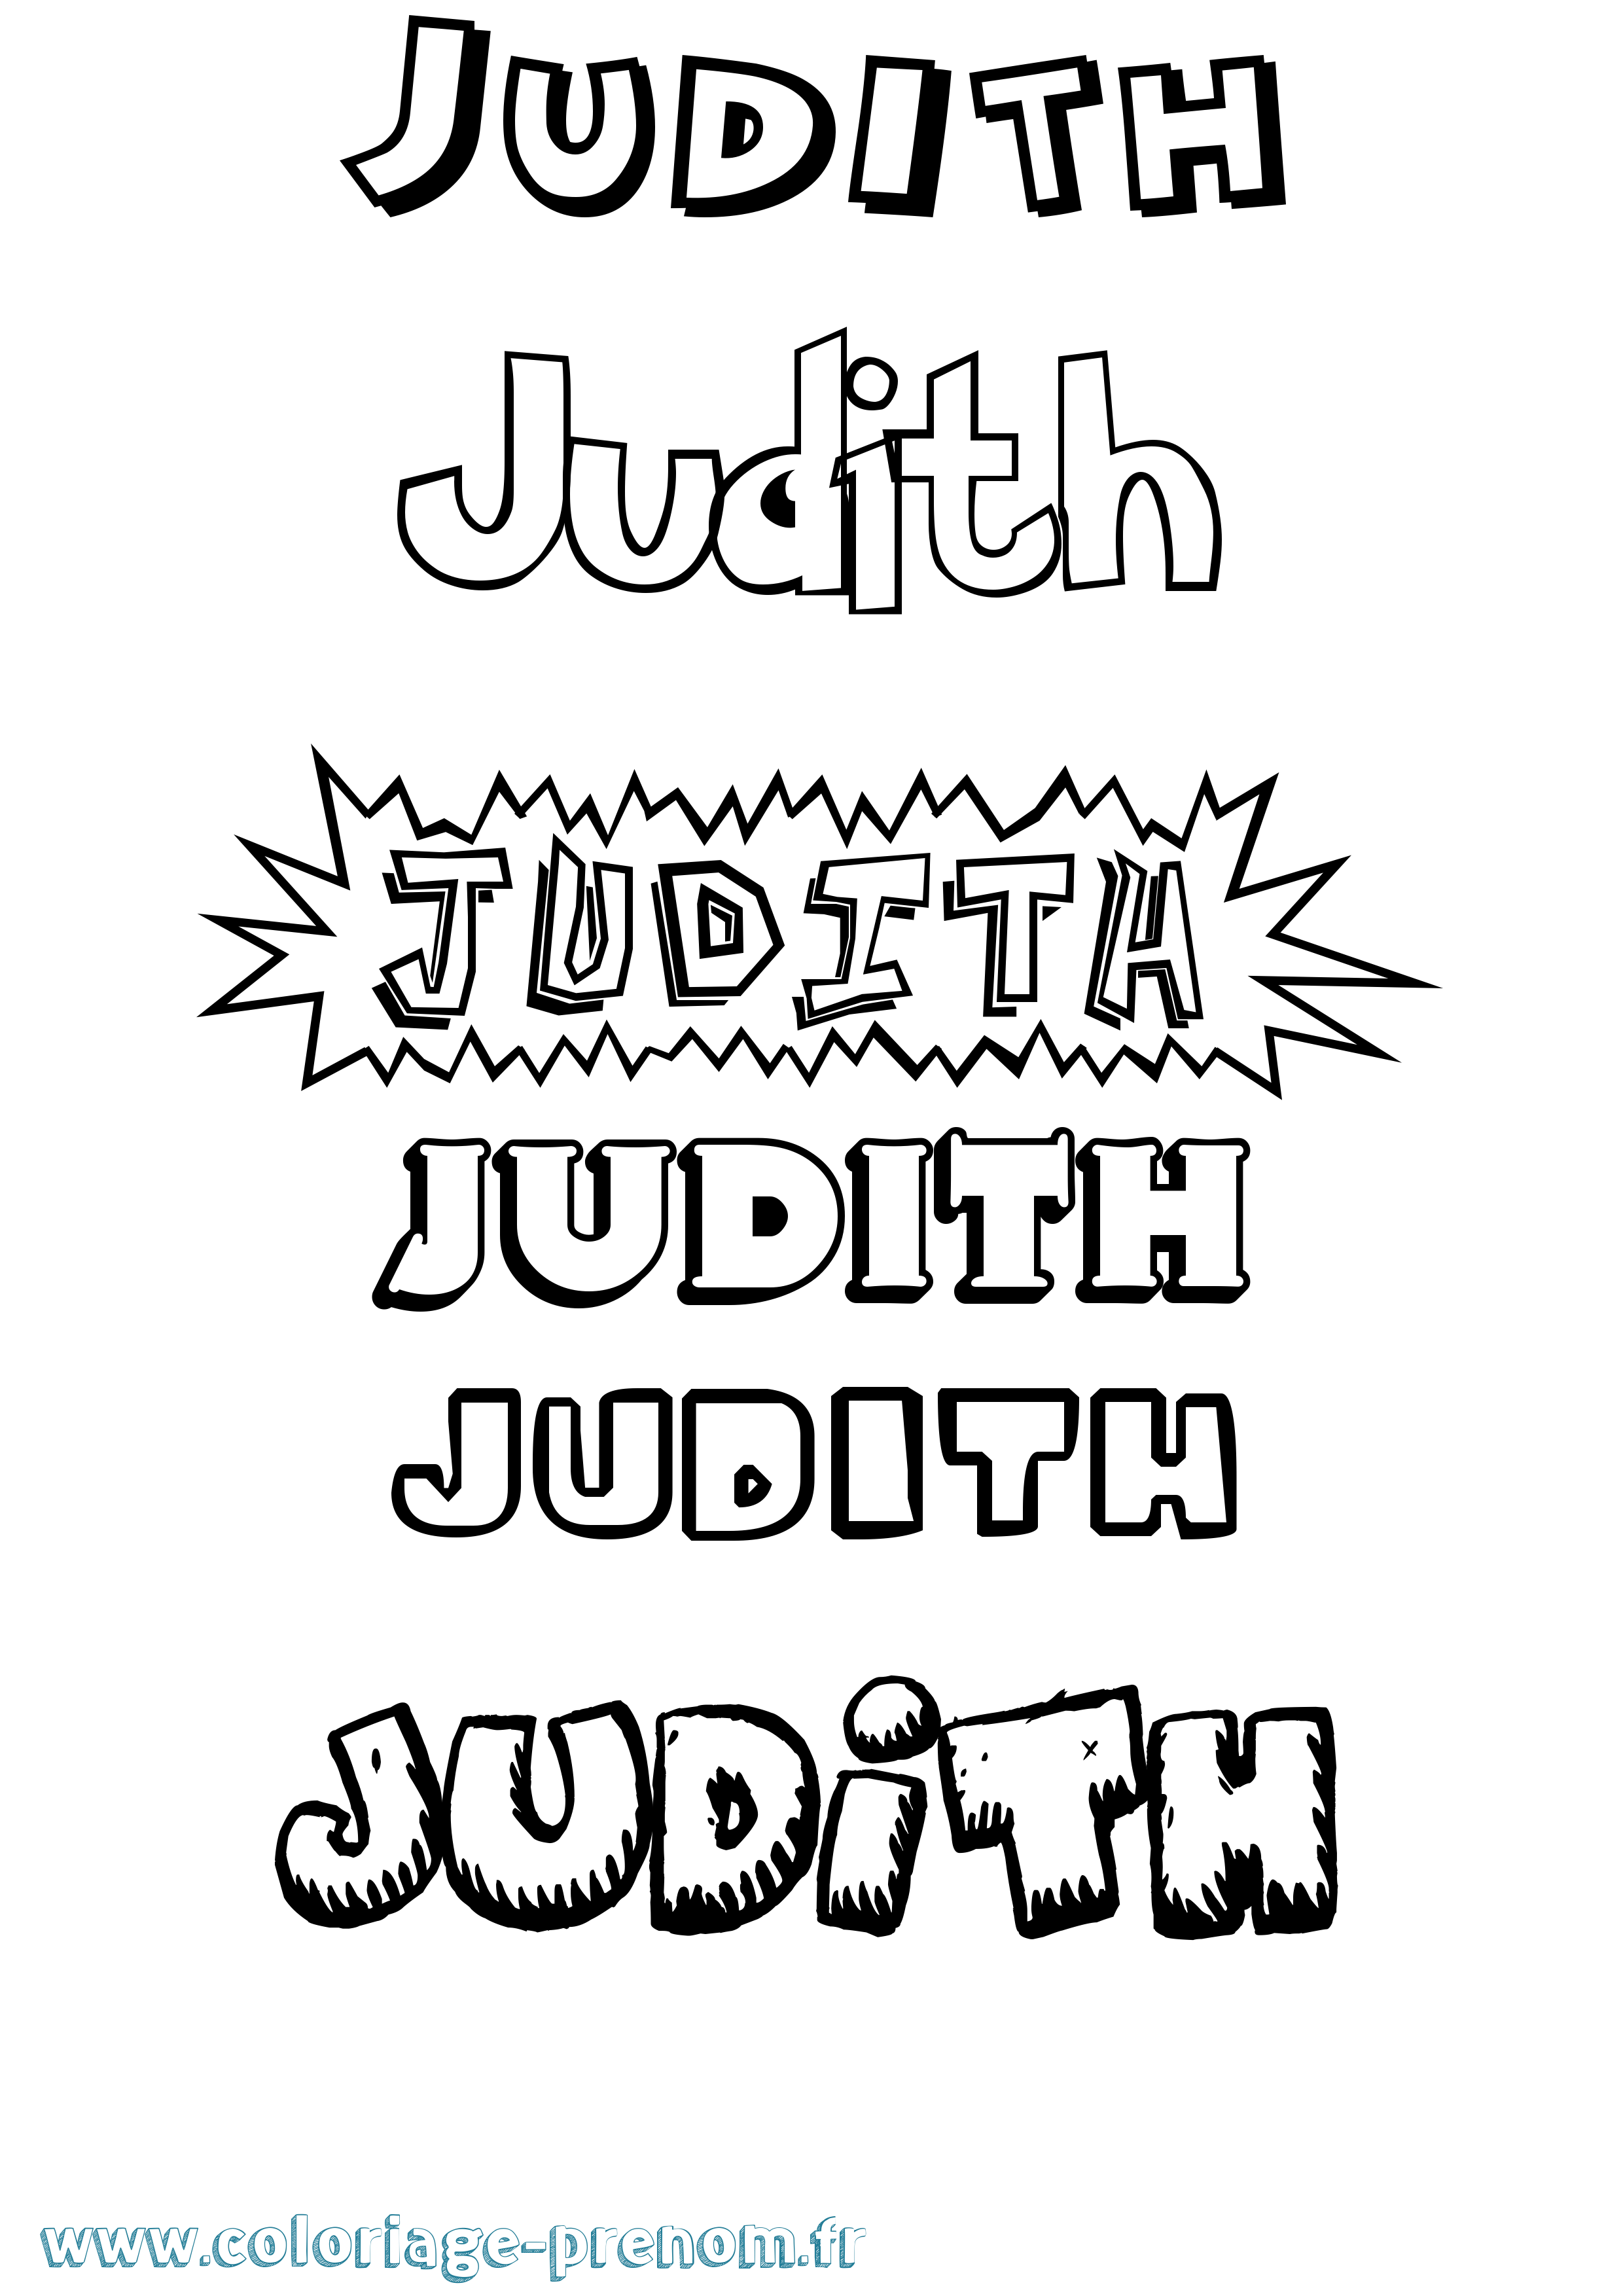 Coloriage prénom Judith